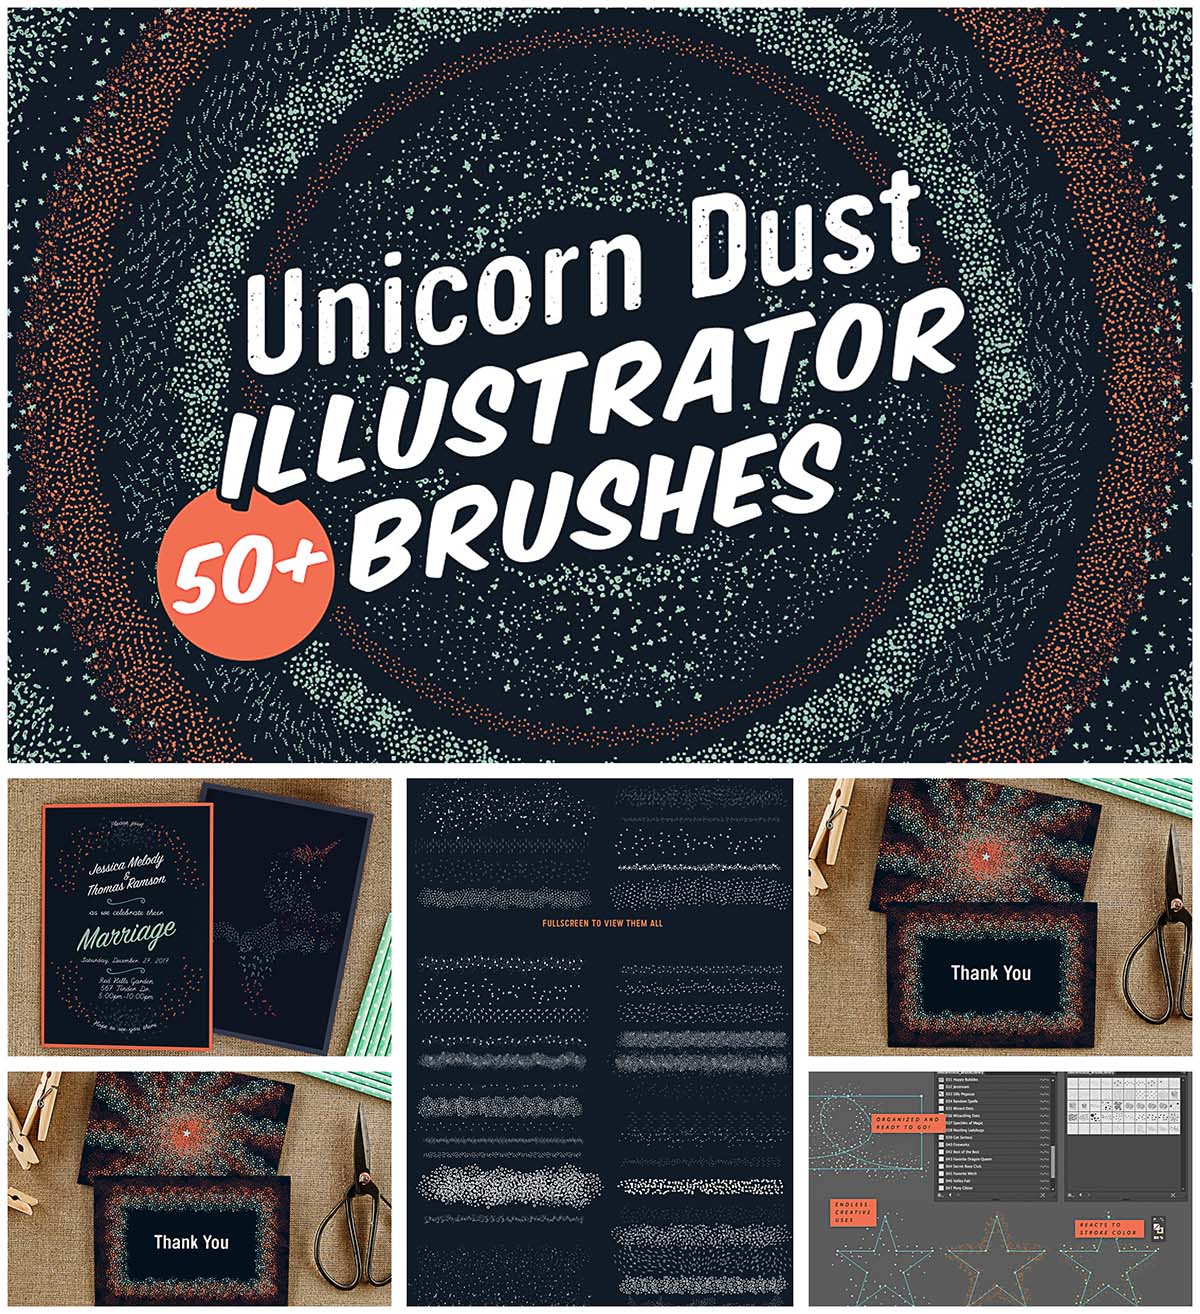 Unicorn dust brushes collection